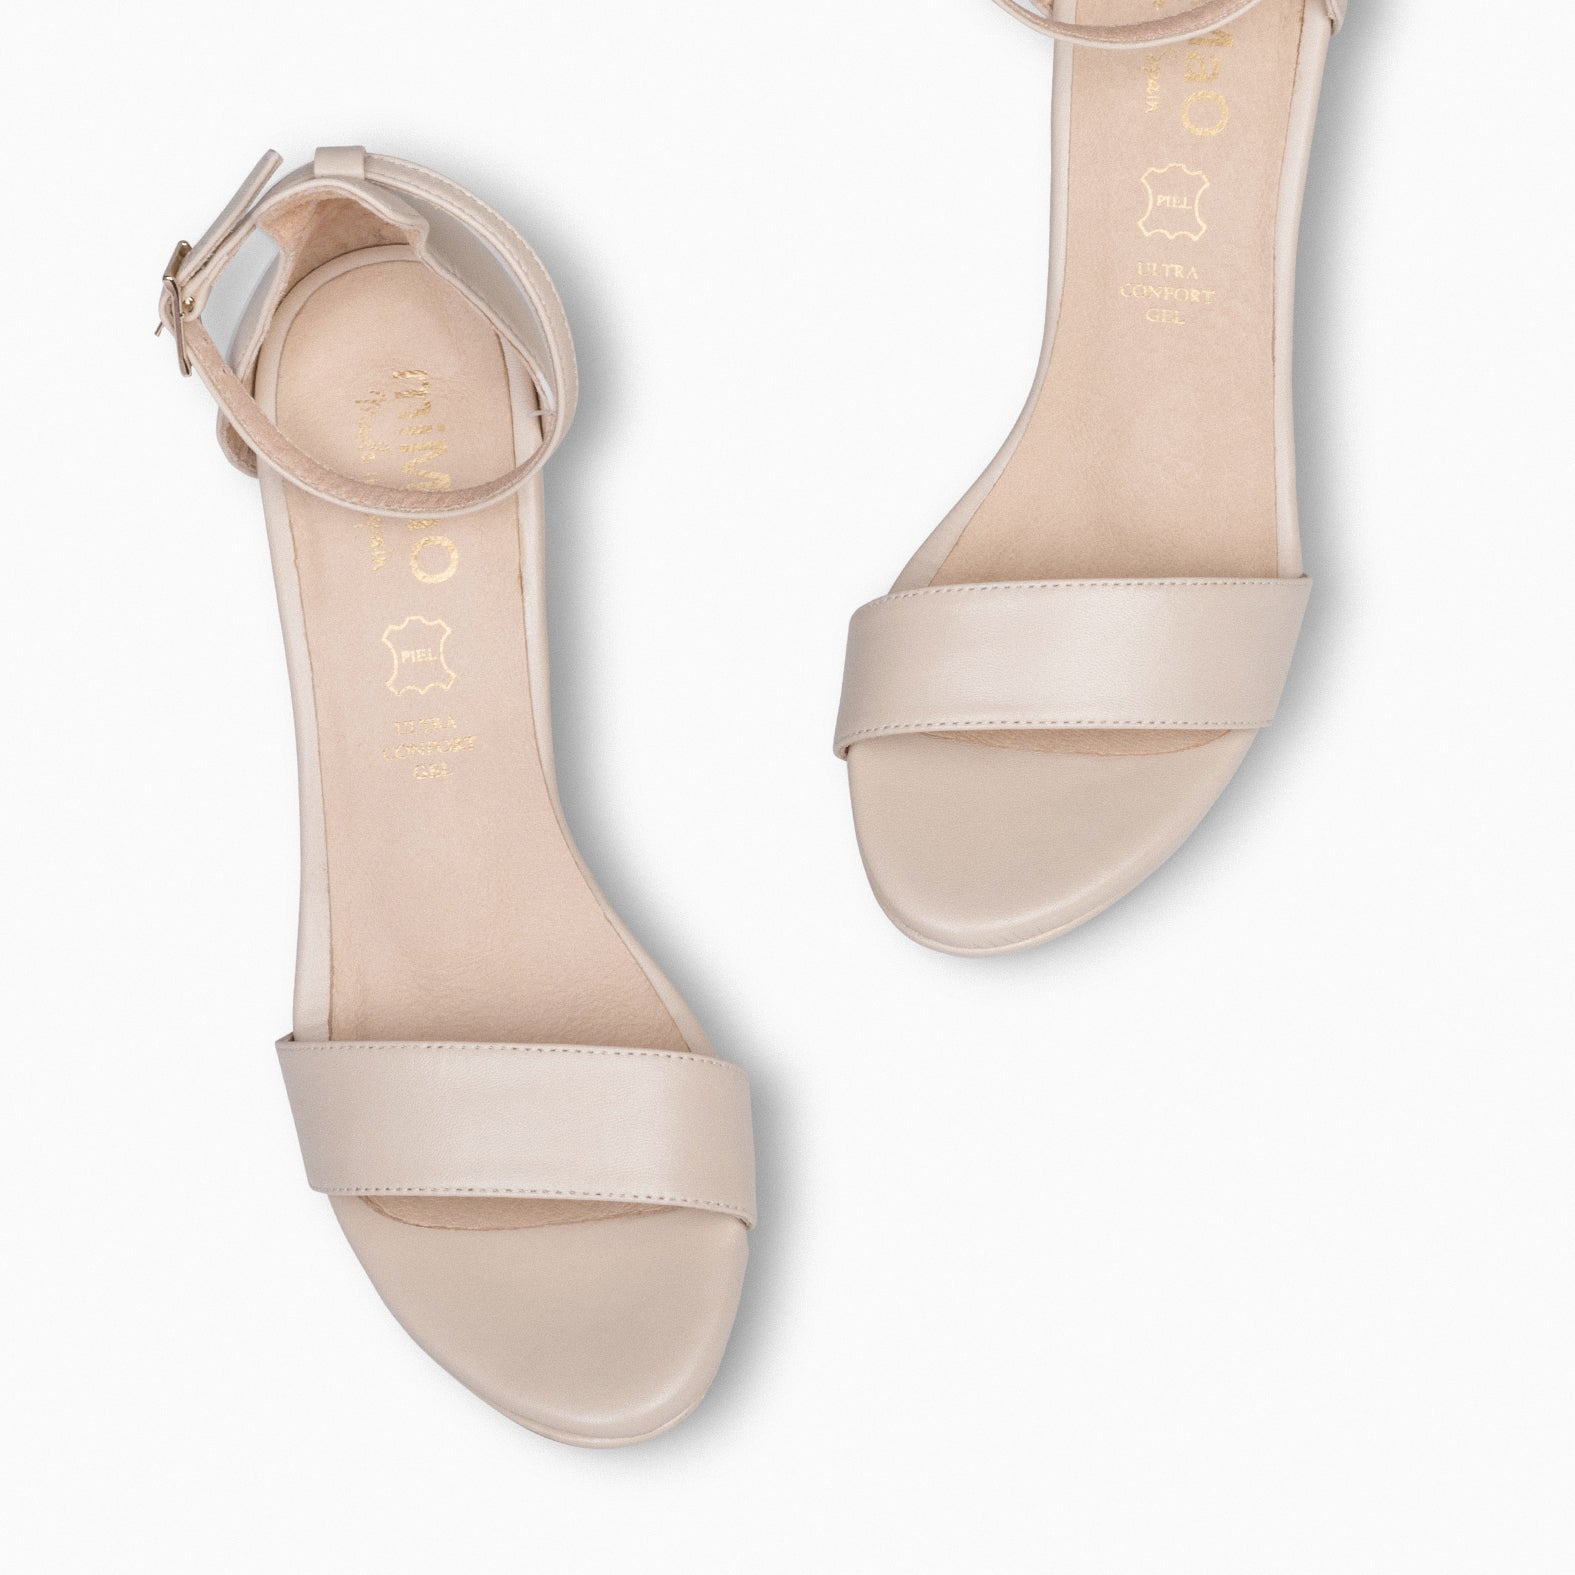 PARTY – BEIGE high-heeled platform sandals